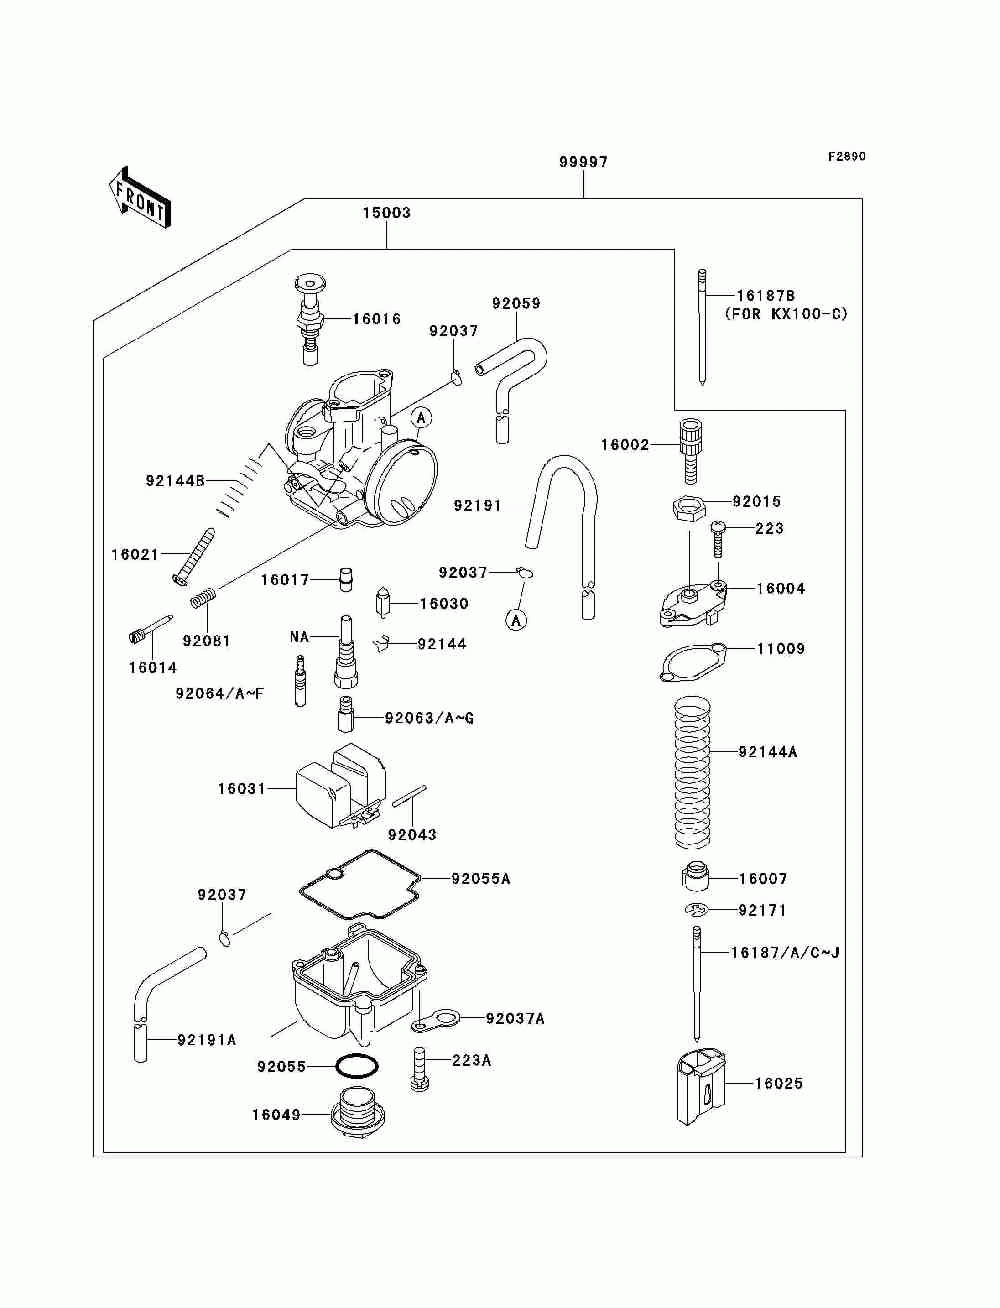 Optional parts(carburetor)